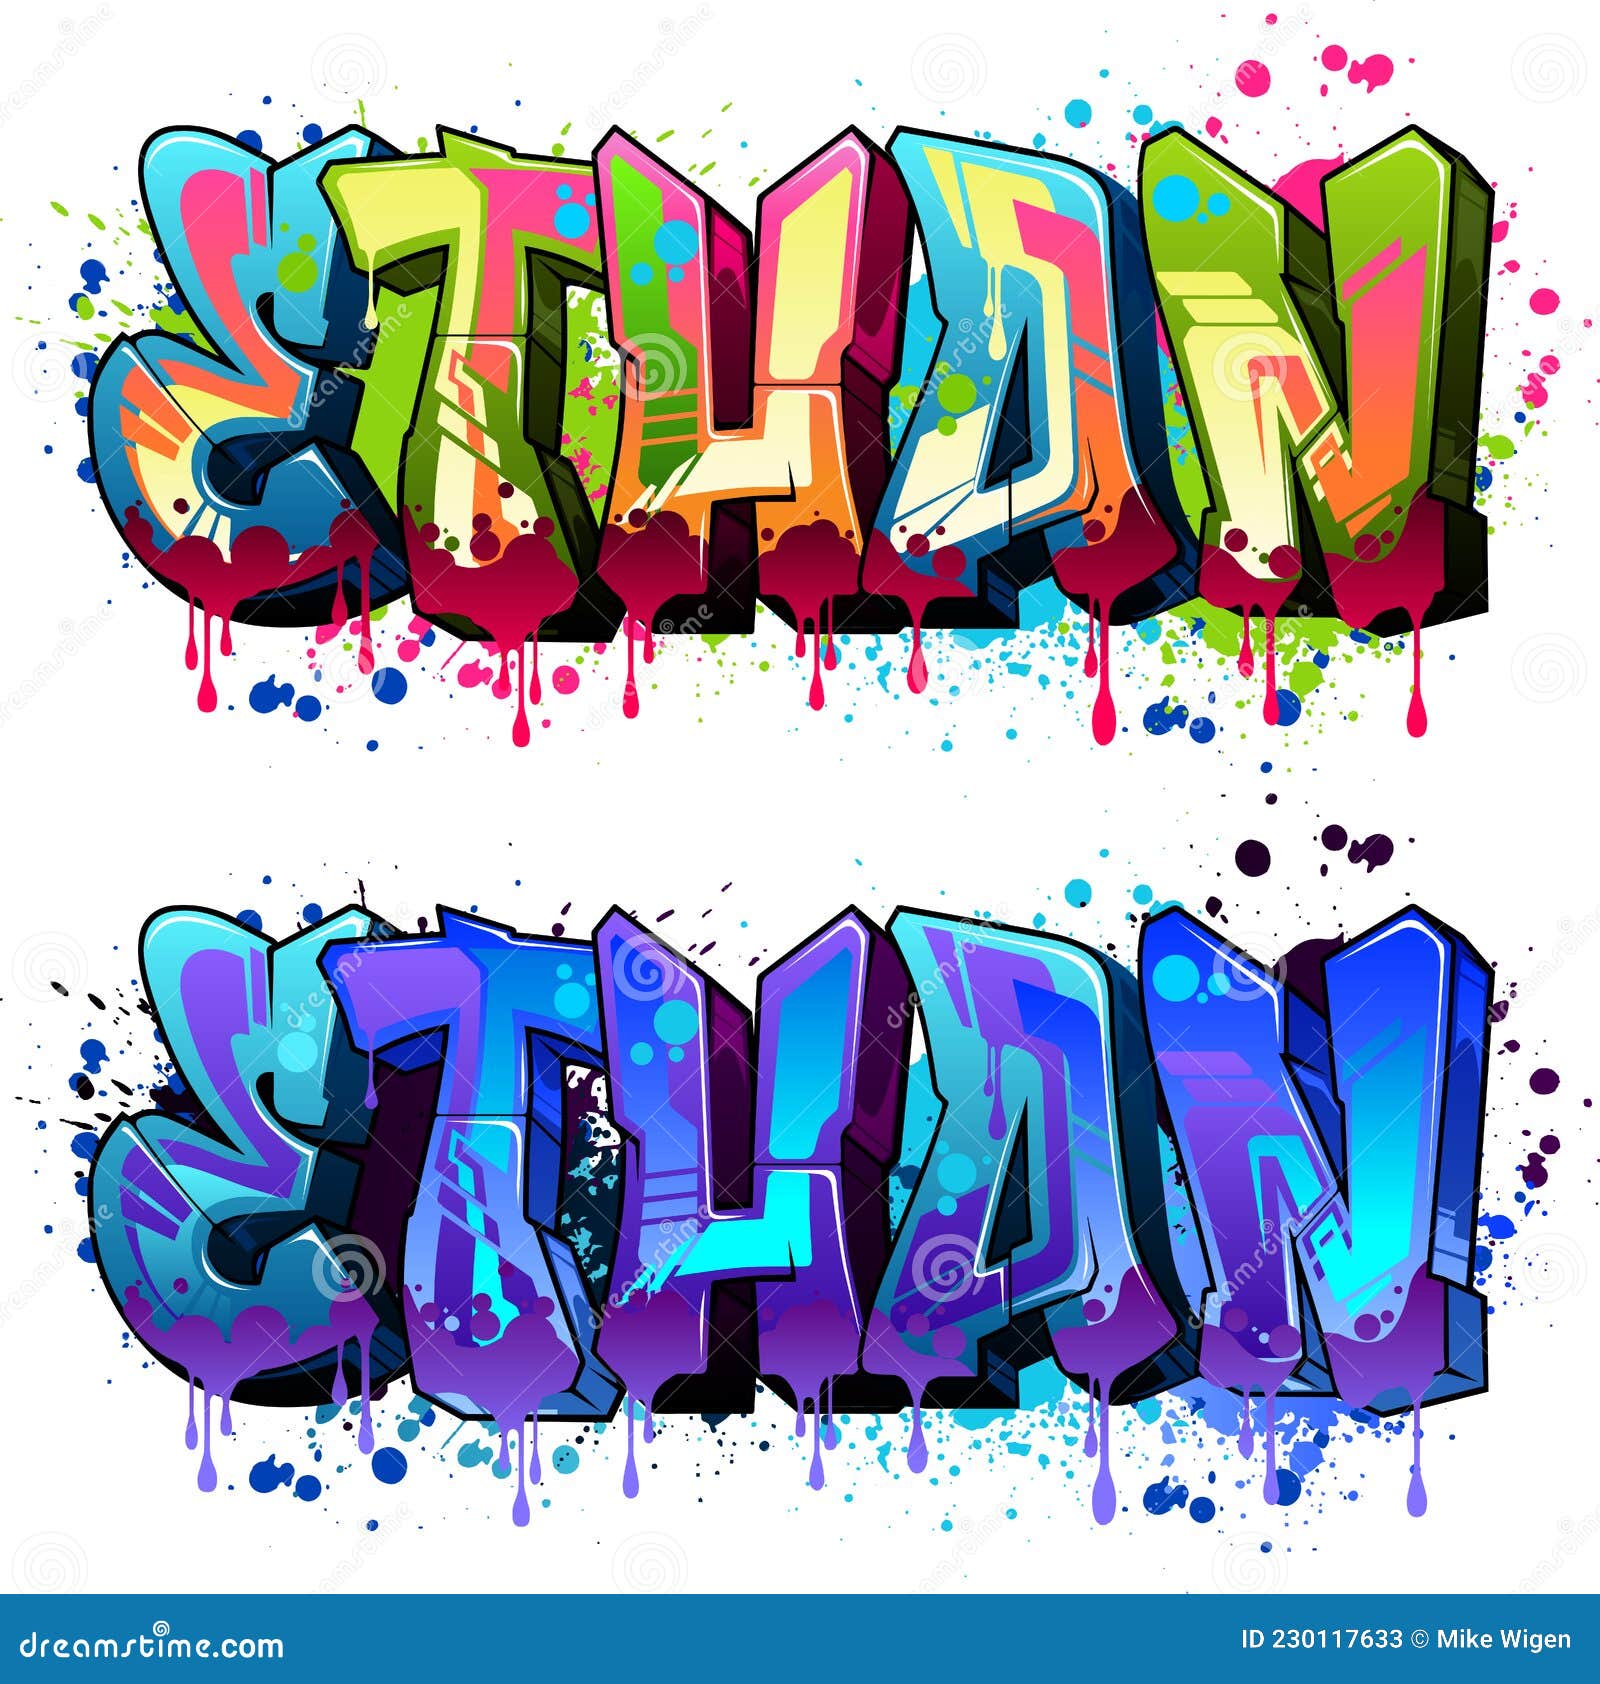 graffiti styled name  - ethan